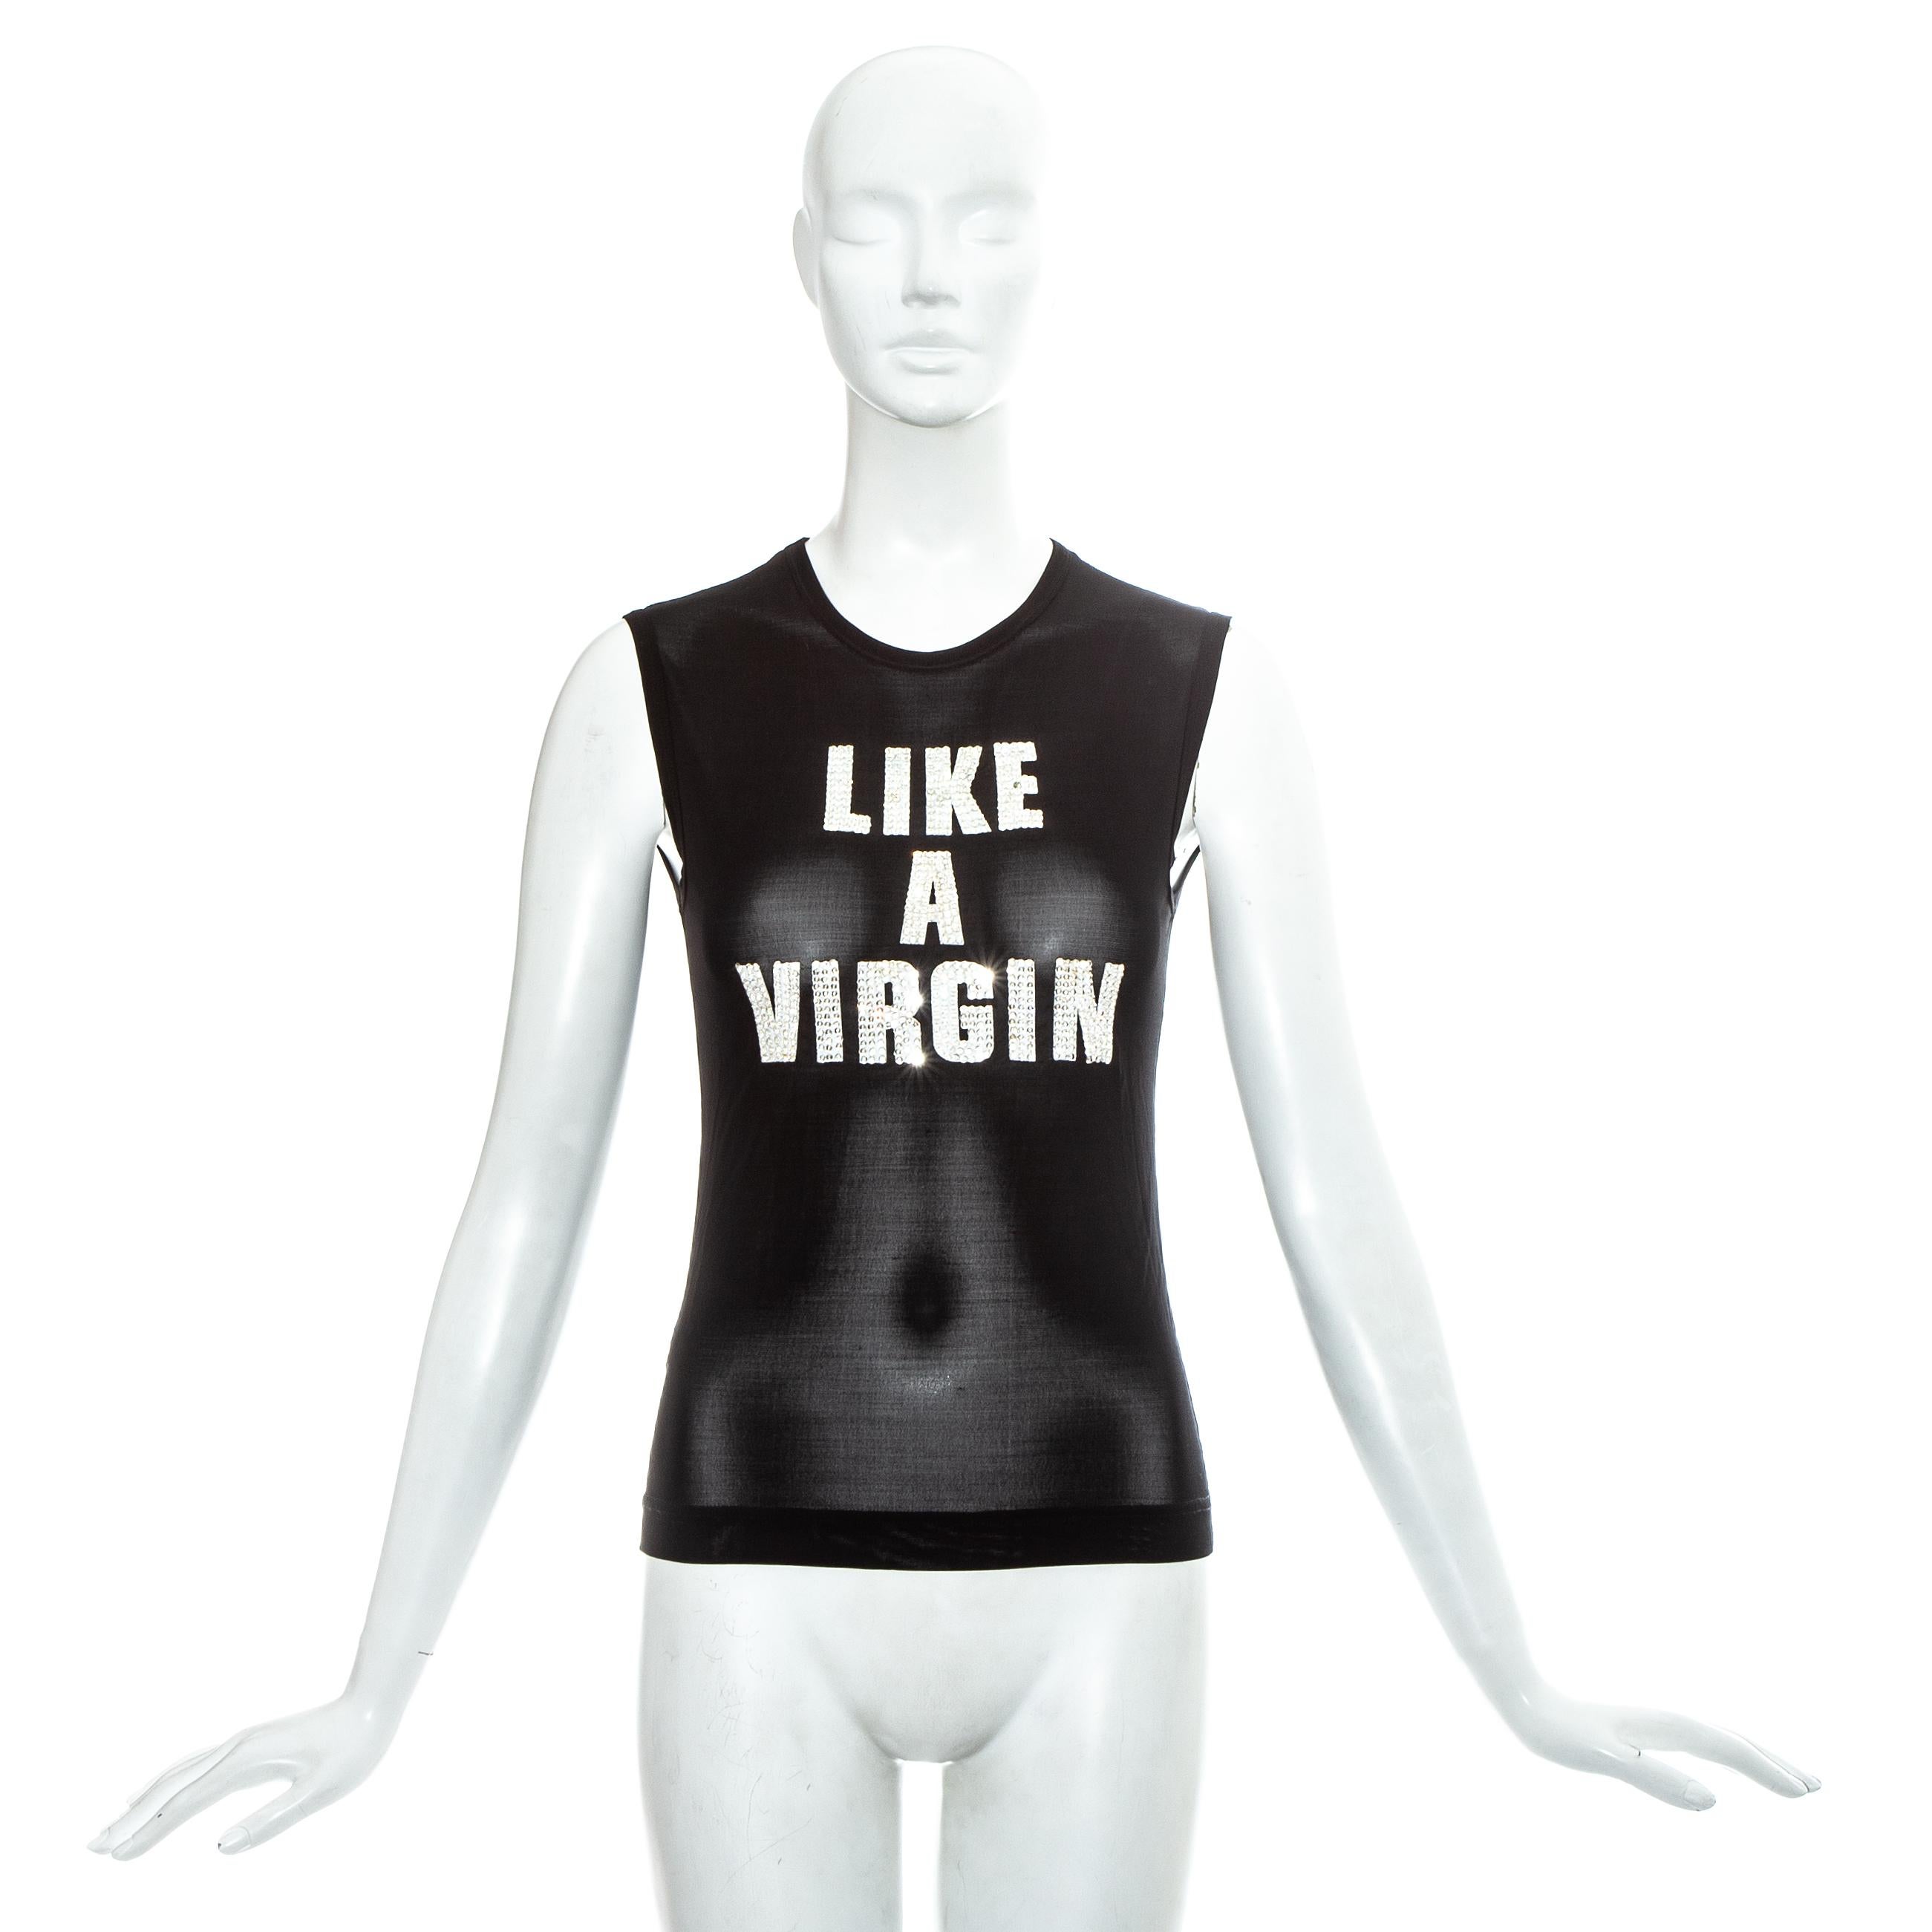 Limited Edition Dolce & Gabbana black mesh vest with rhinestone embellished 'LIKE A VIRGIN', designed for Madonna's 'Drowned' world tour.

Spring-Summer 2001